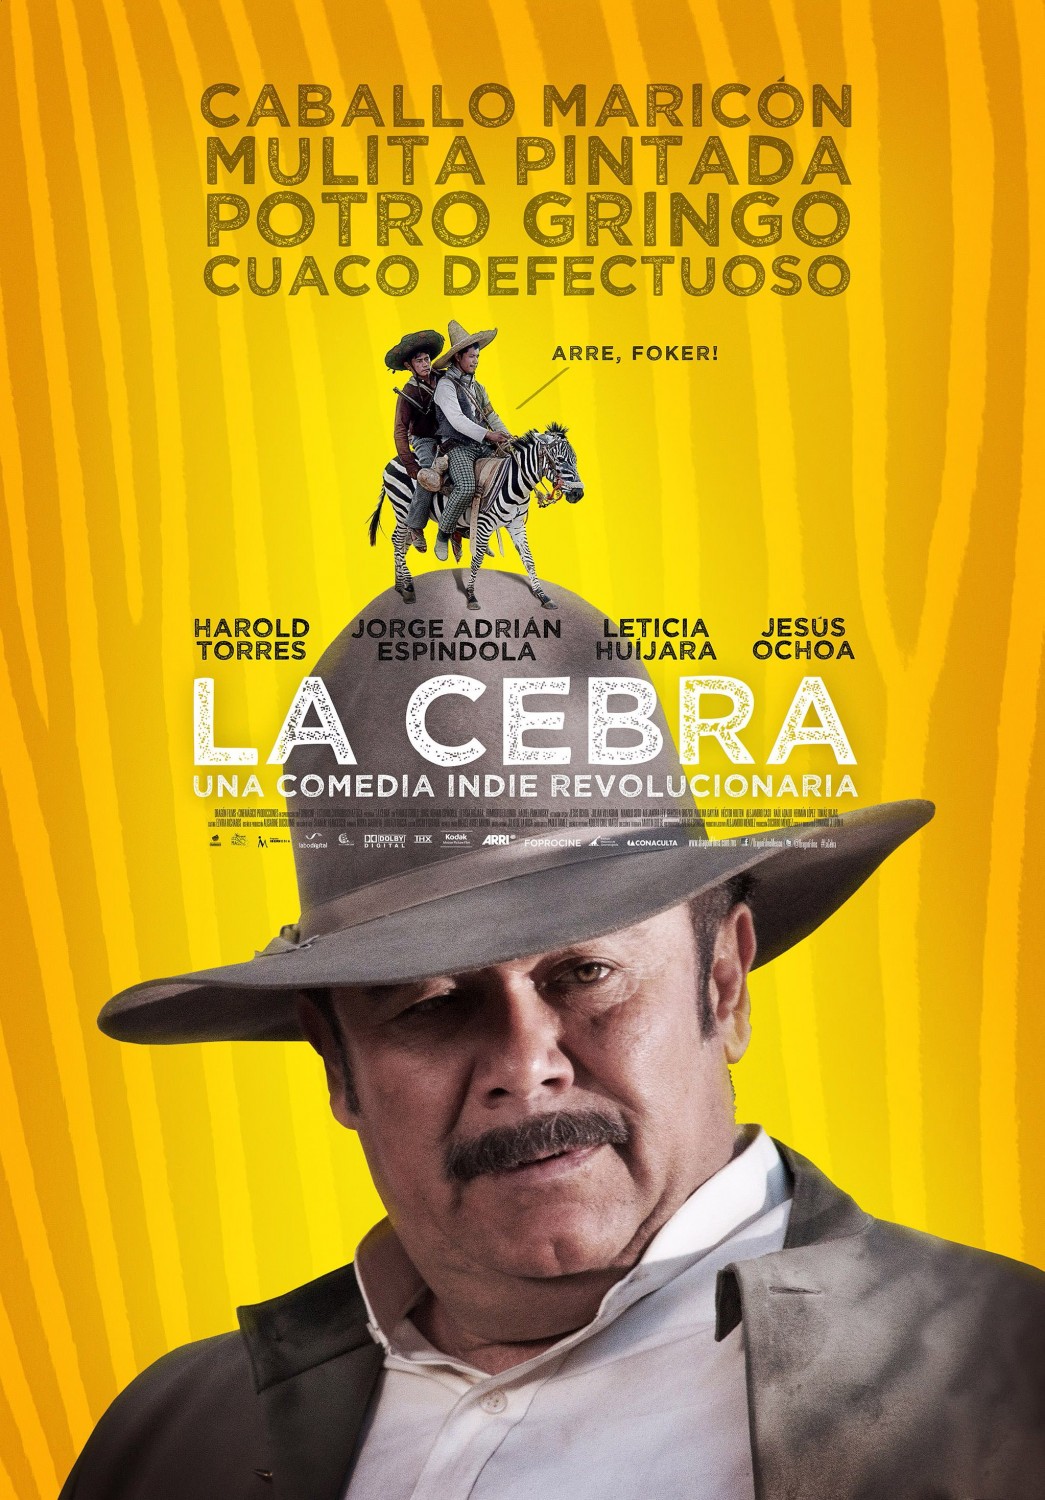 Extra Large Movie Poster Image for La cebra 